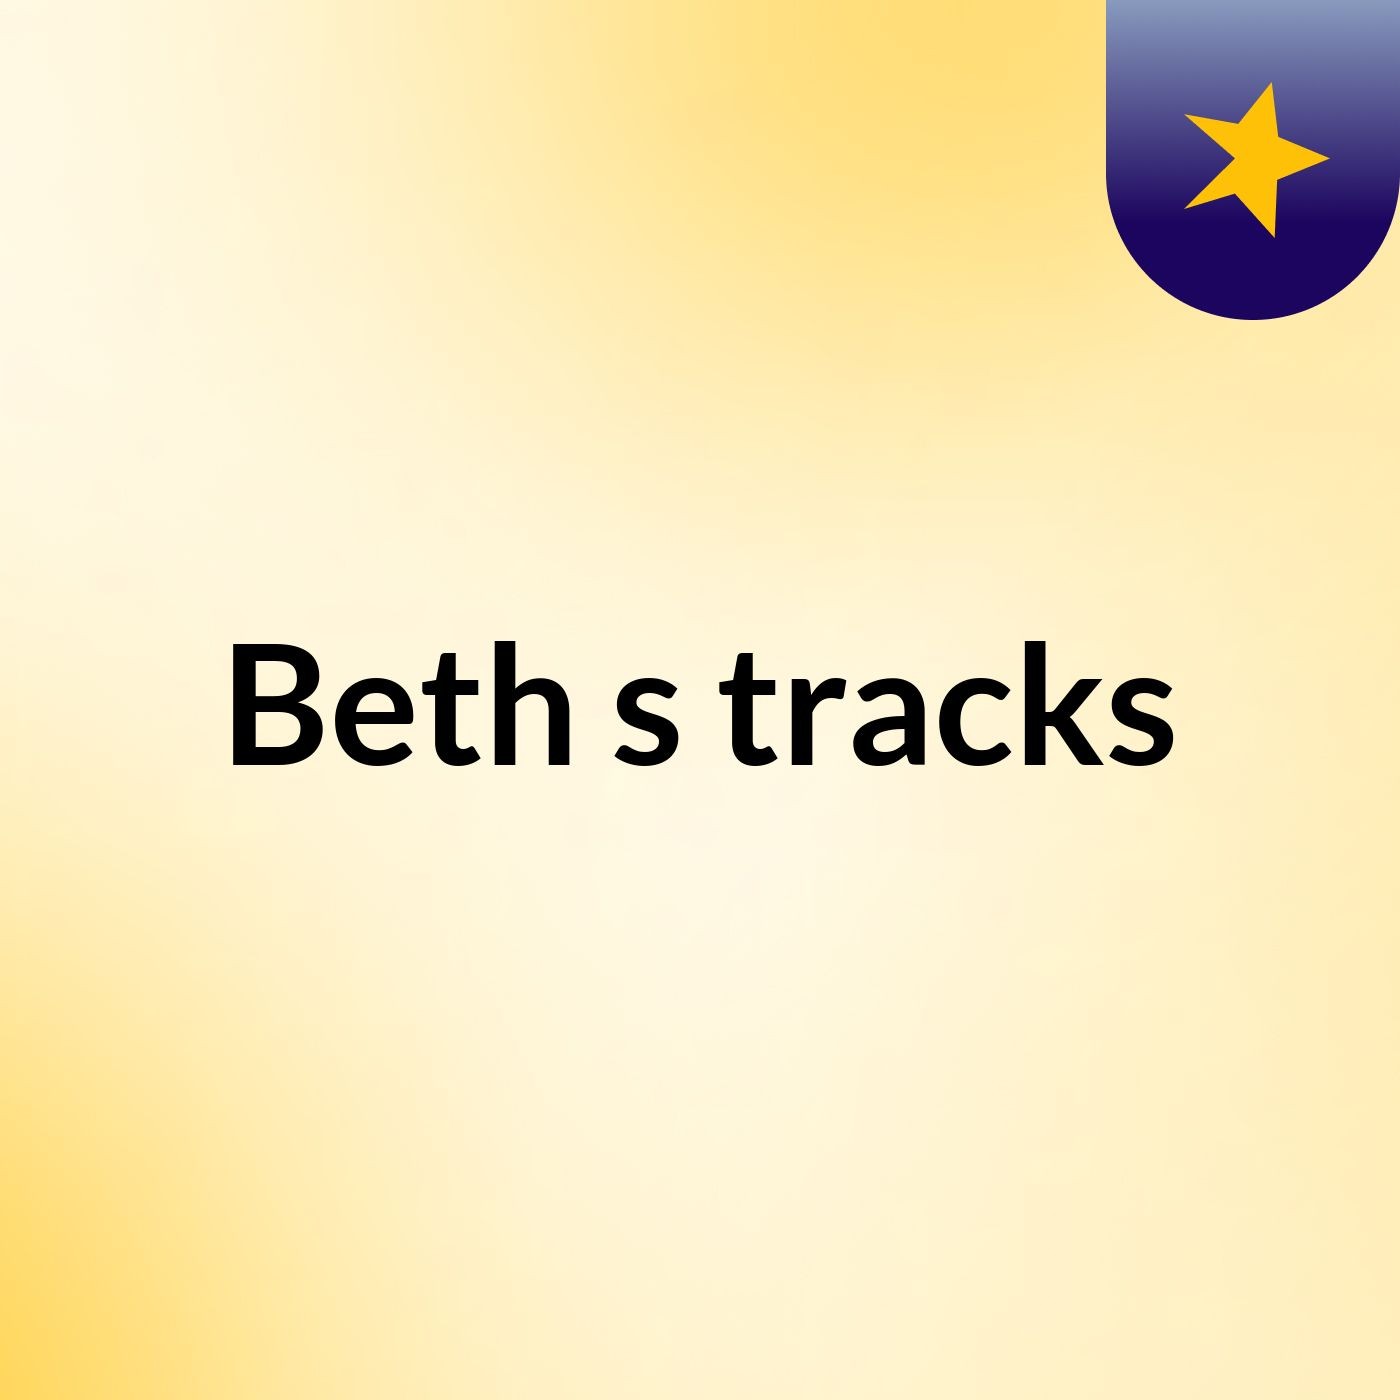 Beth's tracks